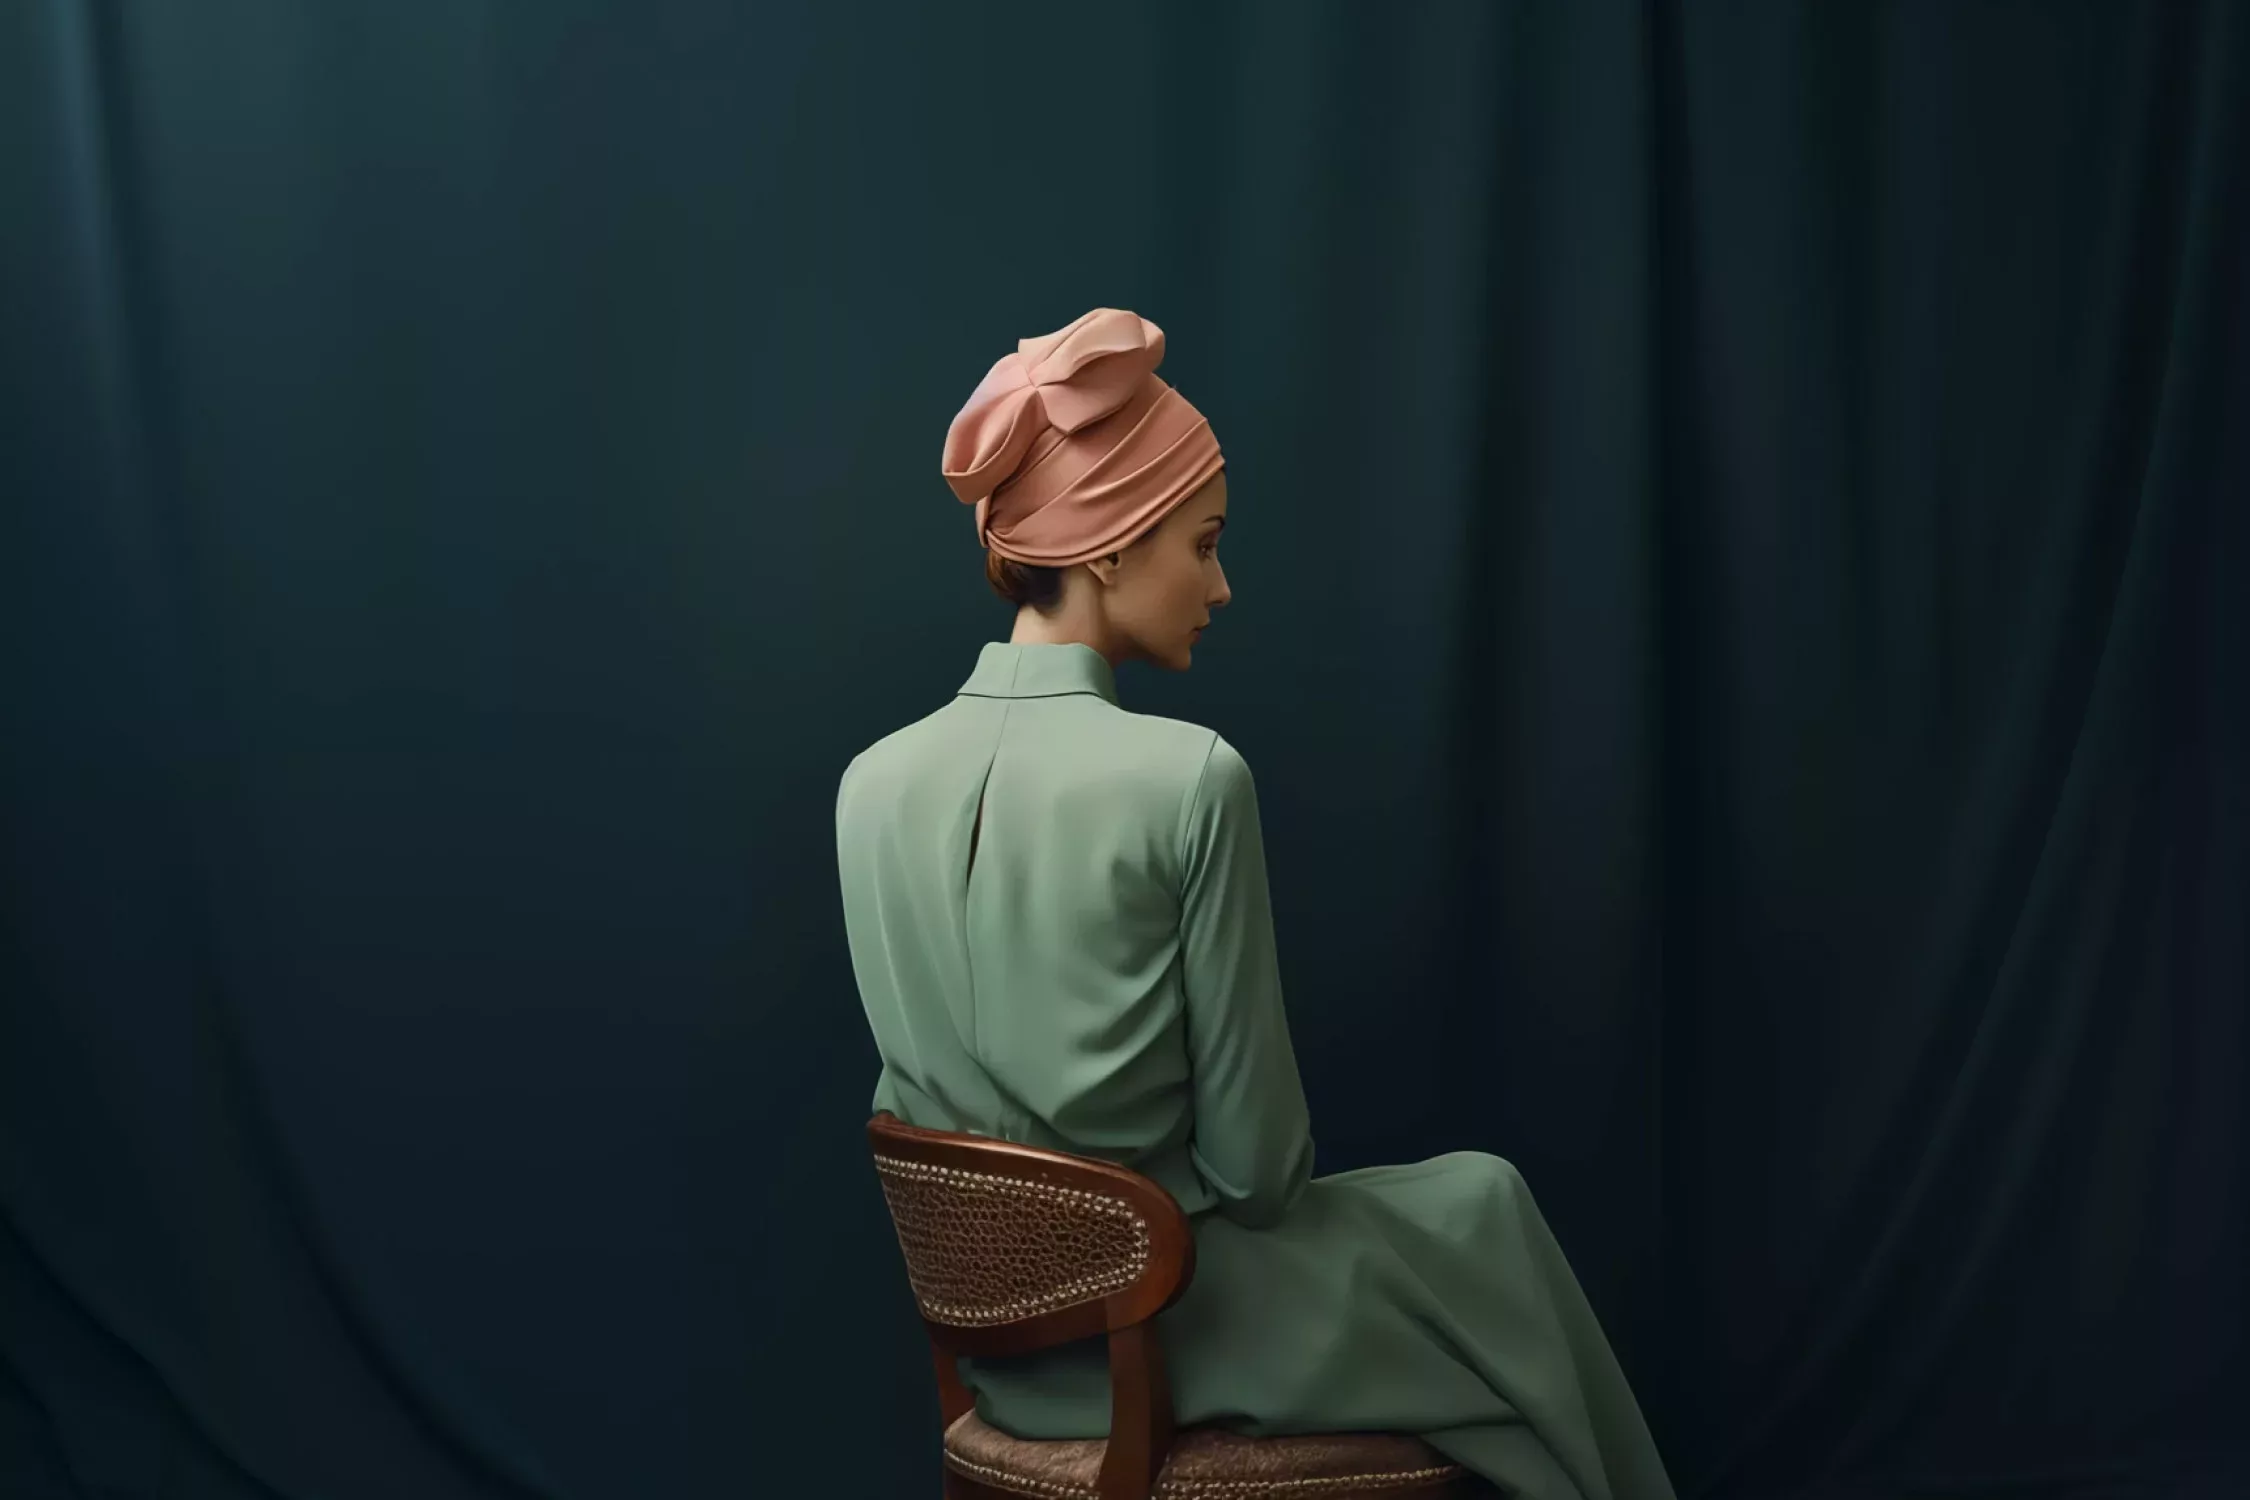 a model in a green dress is sitting wearing a turban